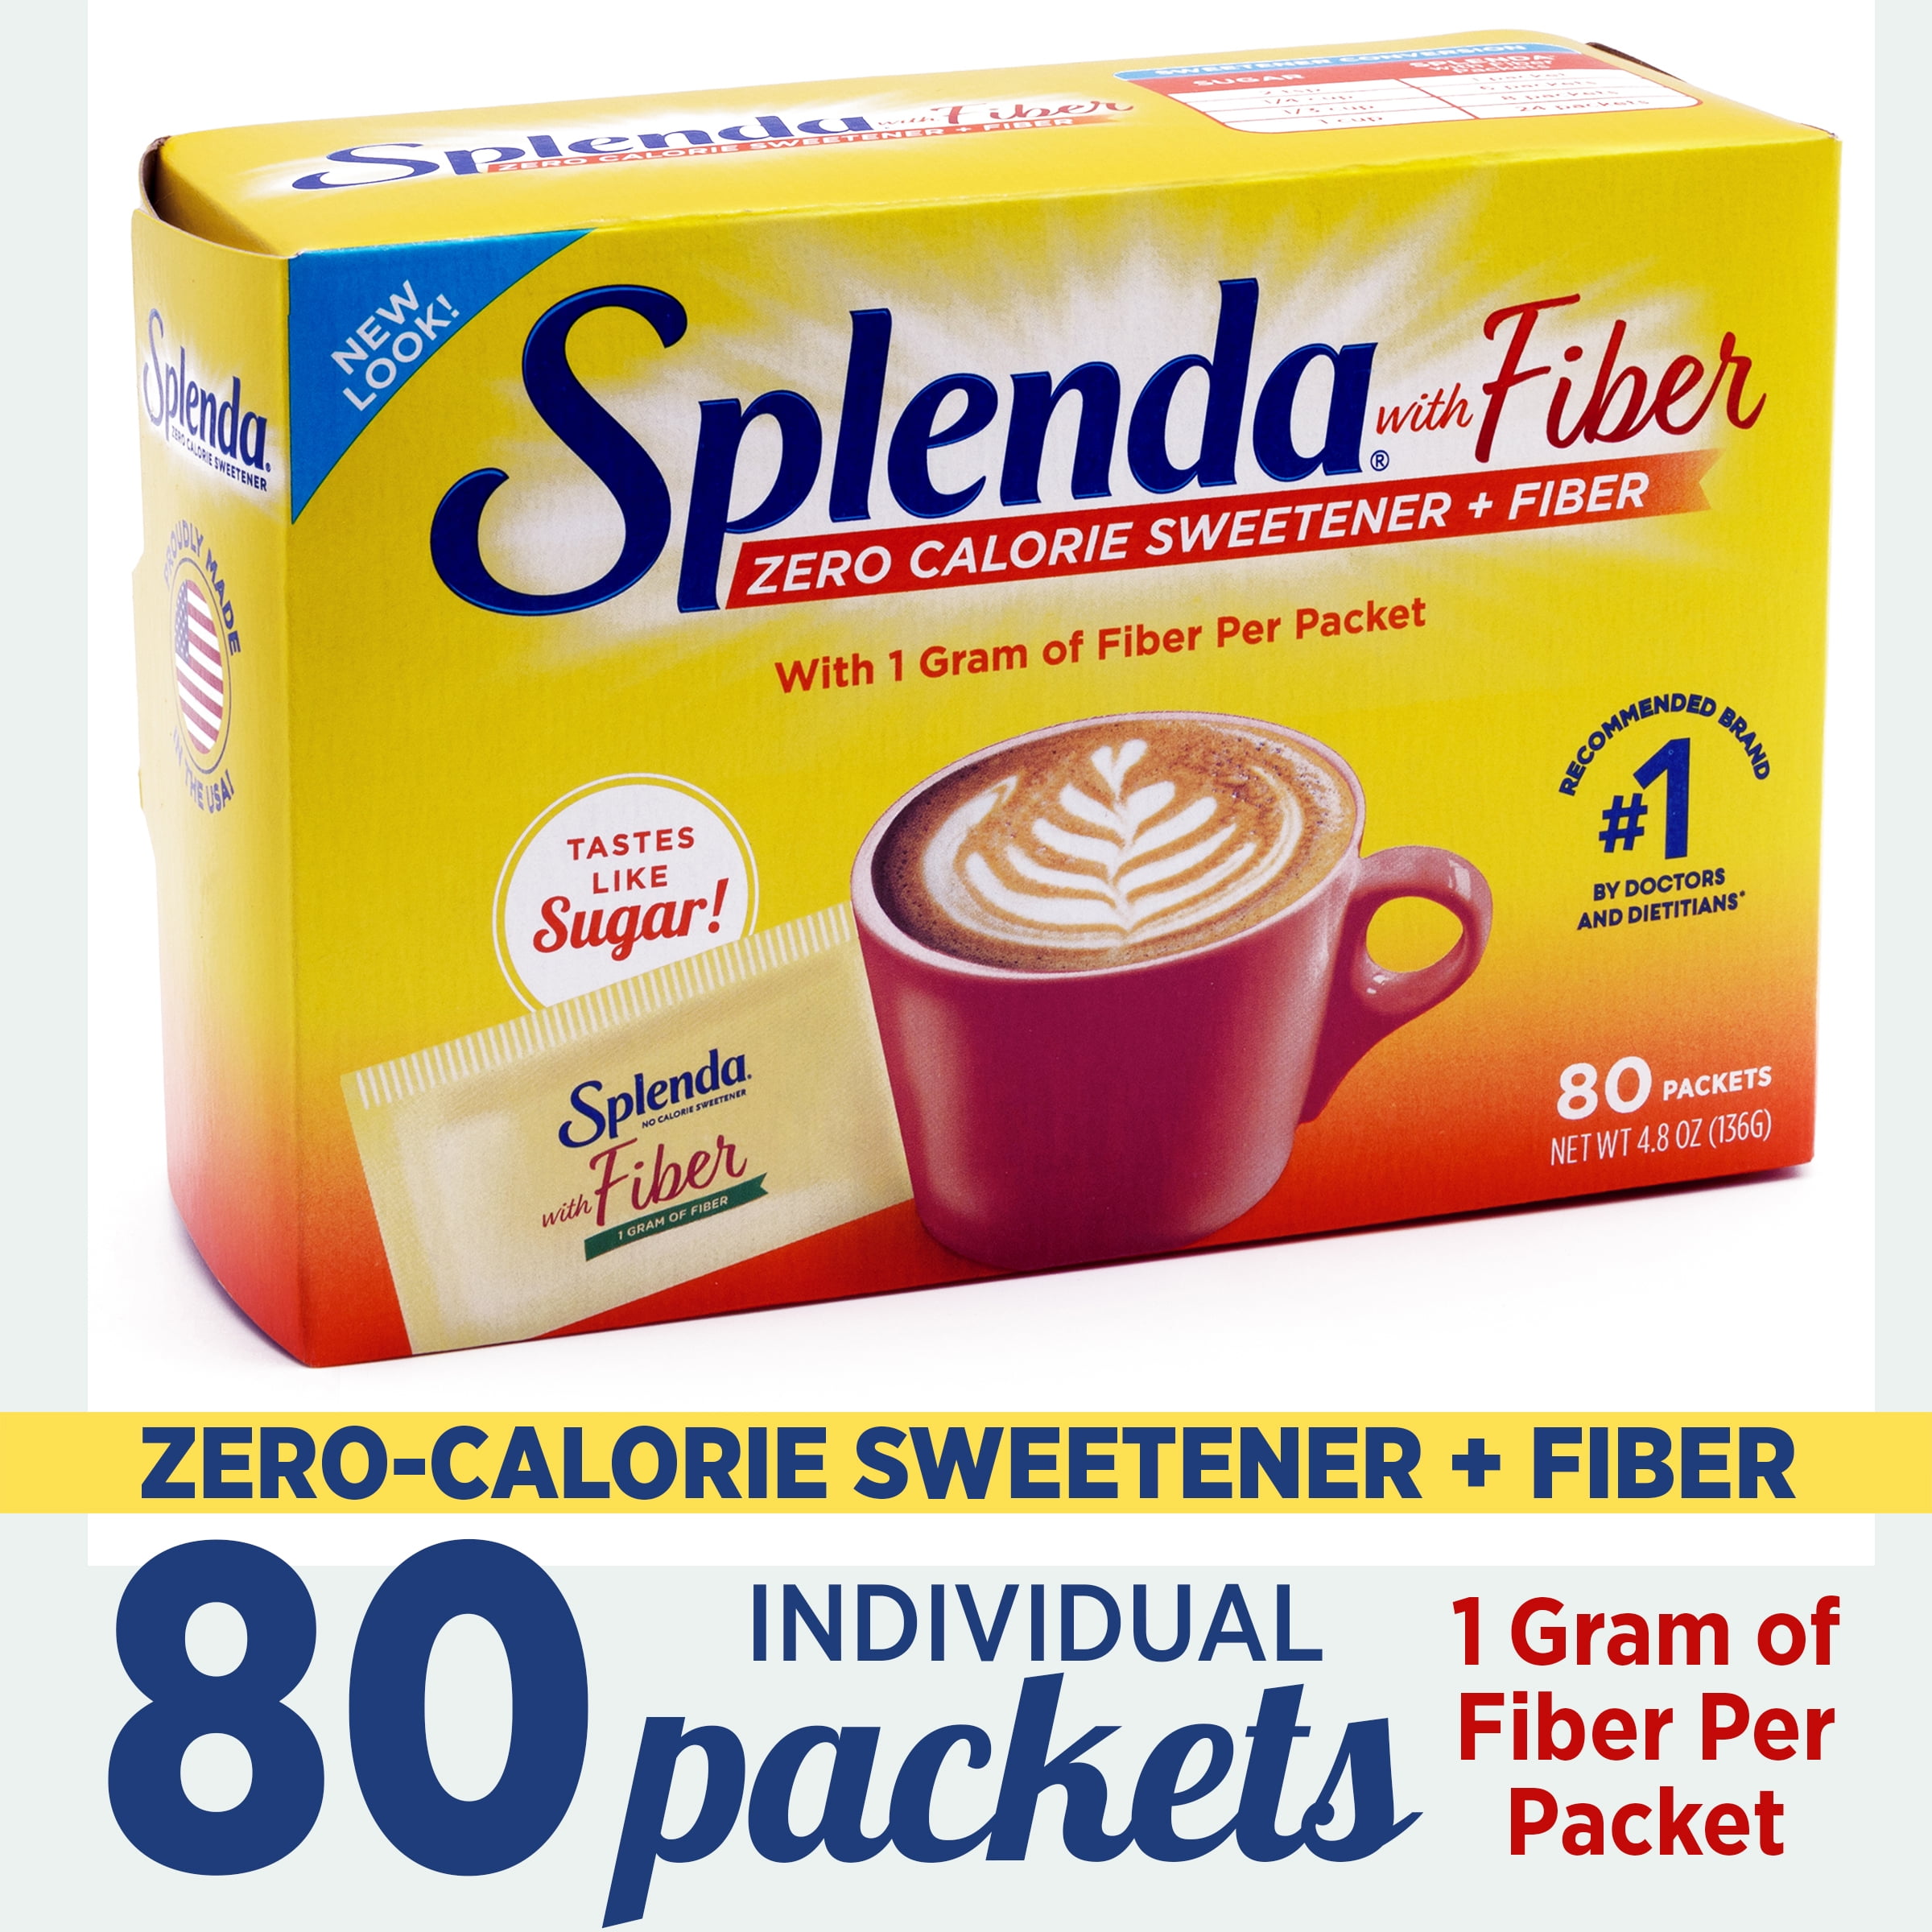 Splenda Zero Calorie Sweetener + Fiber, 1G of Fiber Per Packet - 80CT